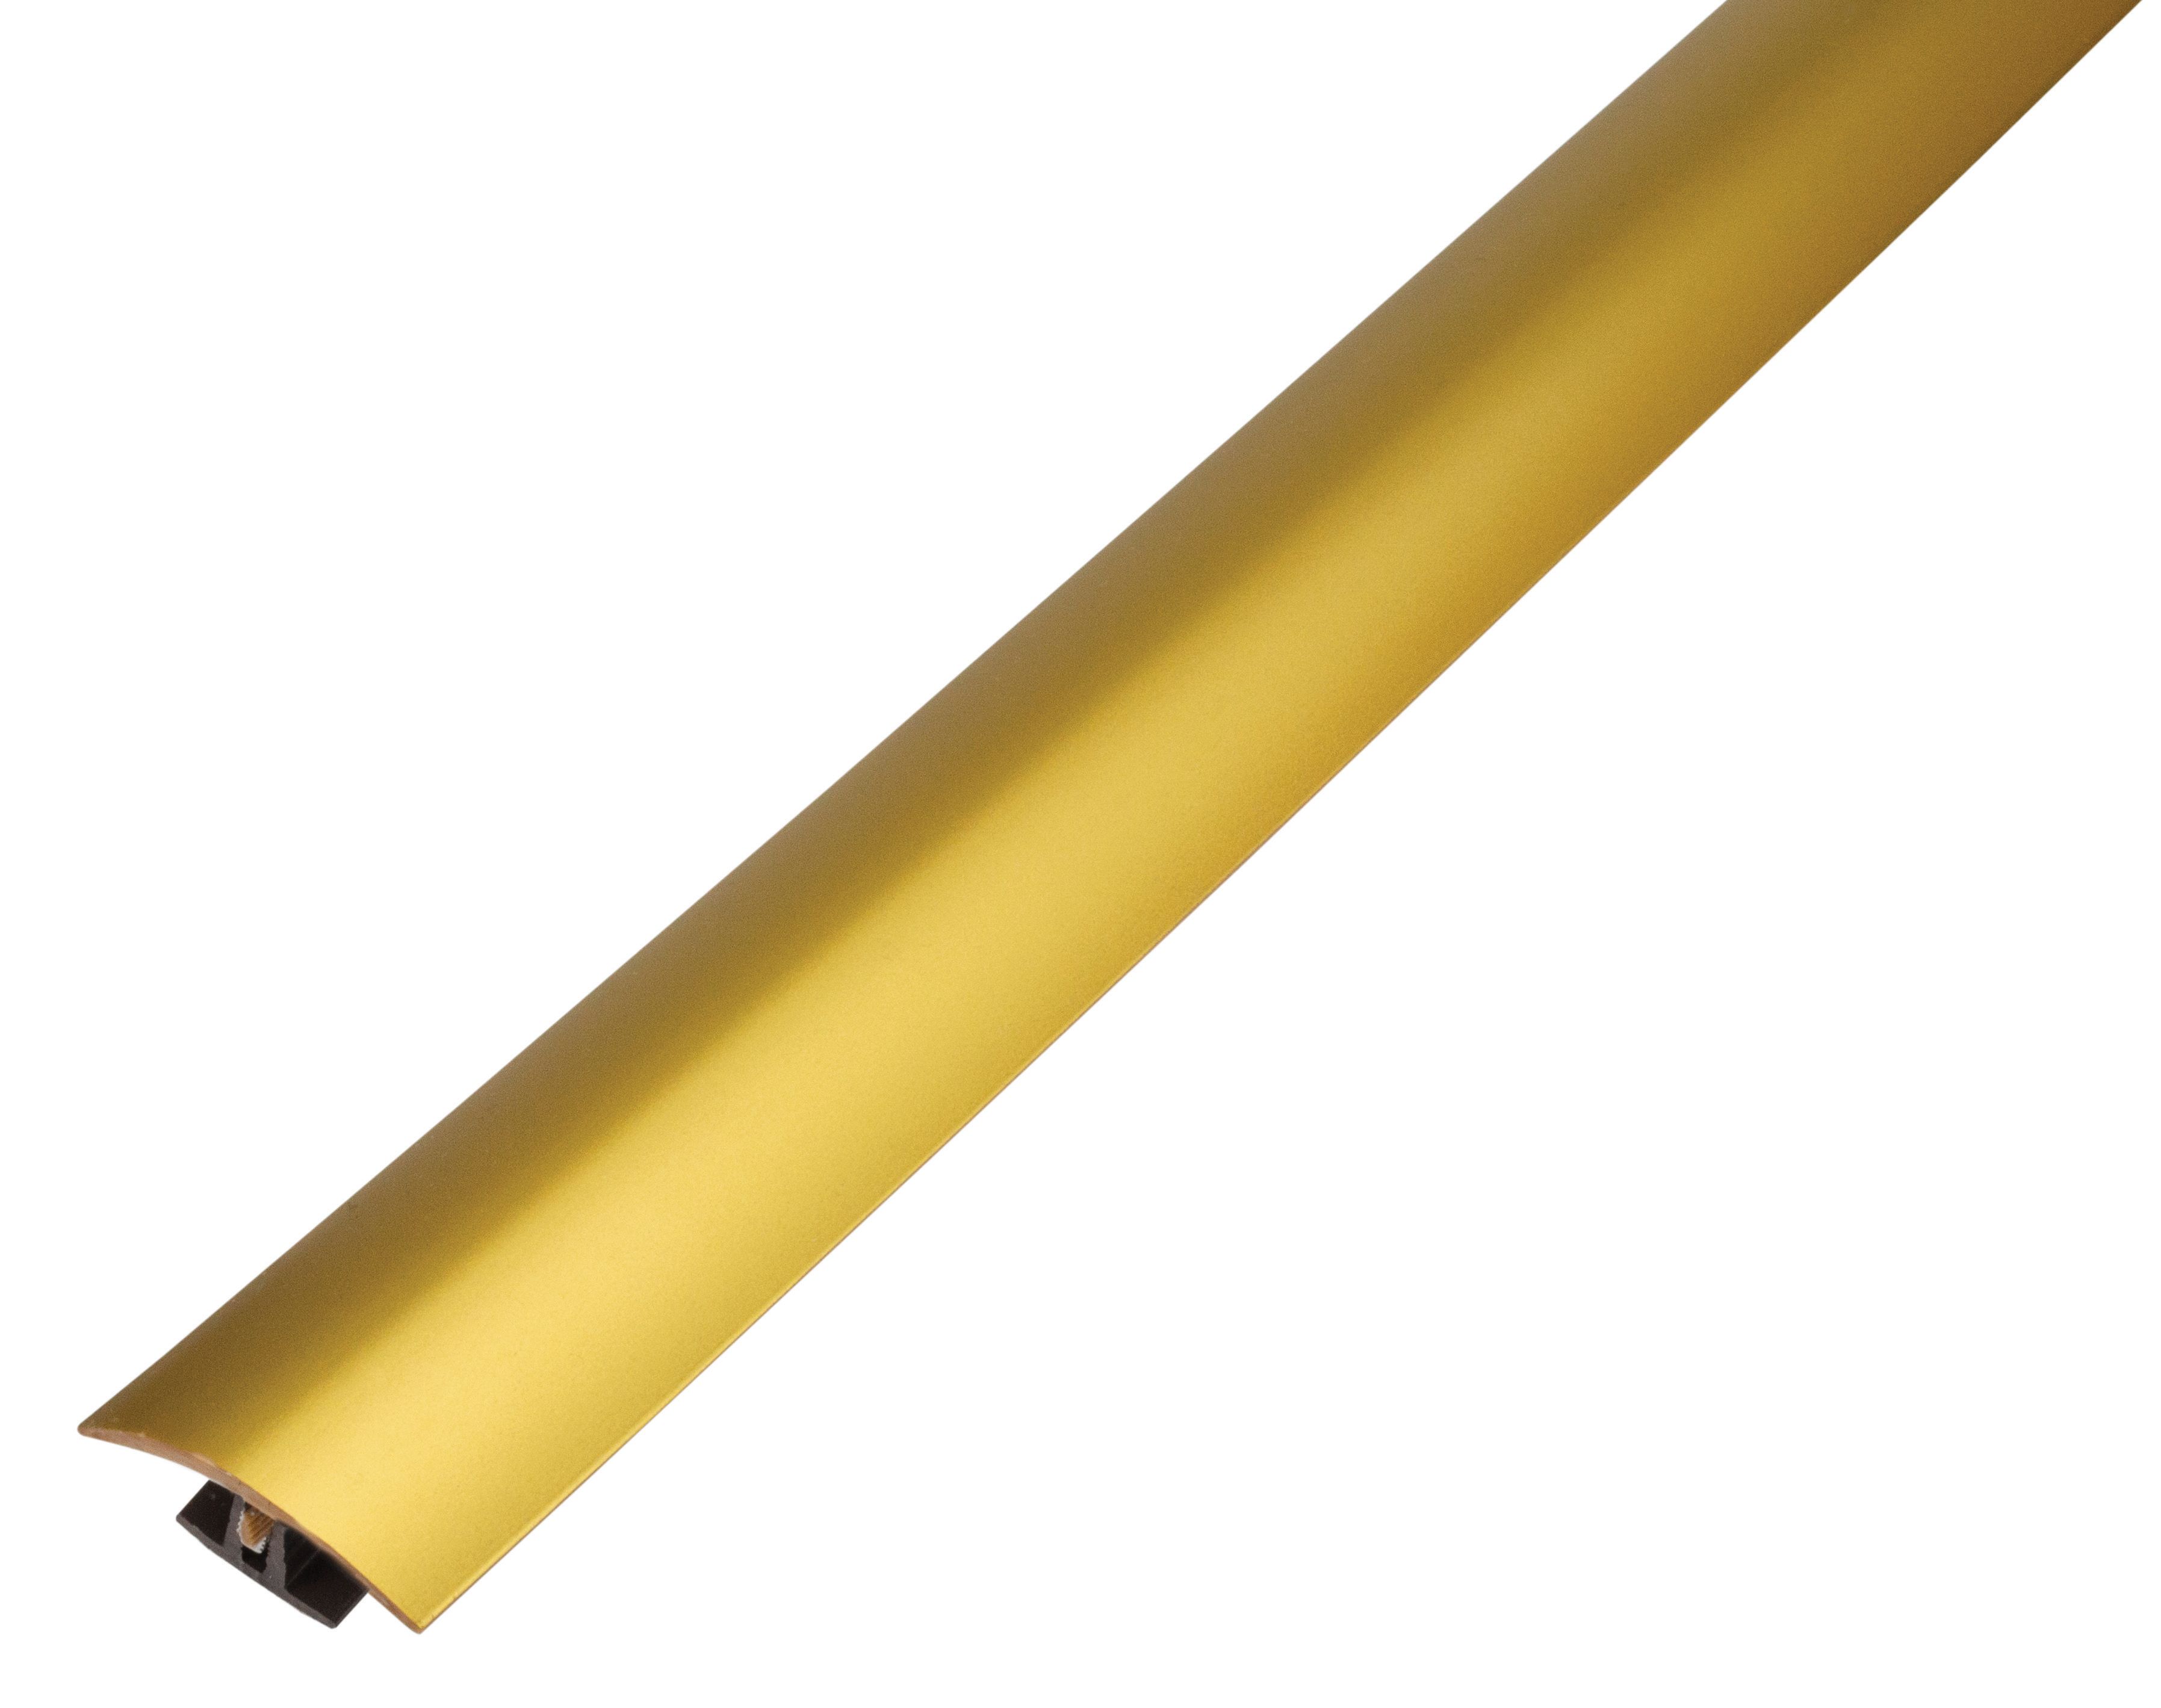 Wickes Gold Flooring T-bar & Reducer - 1.8m